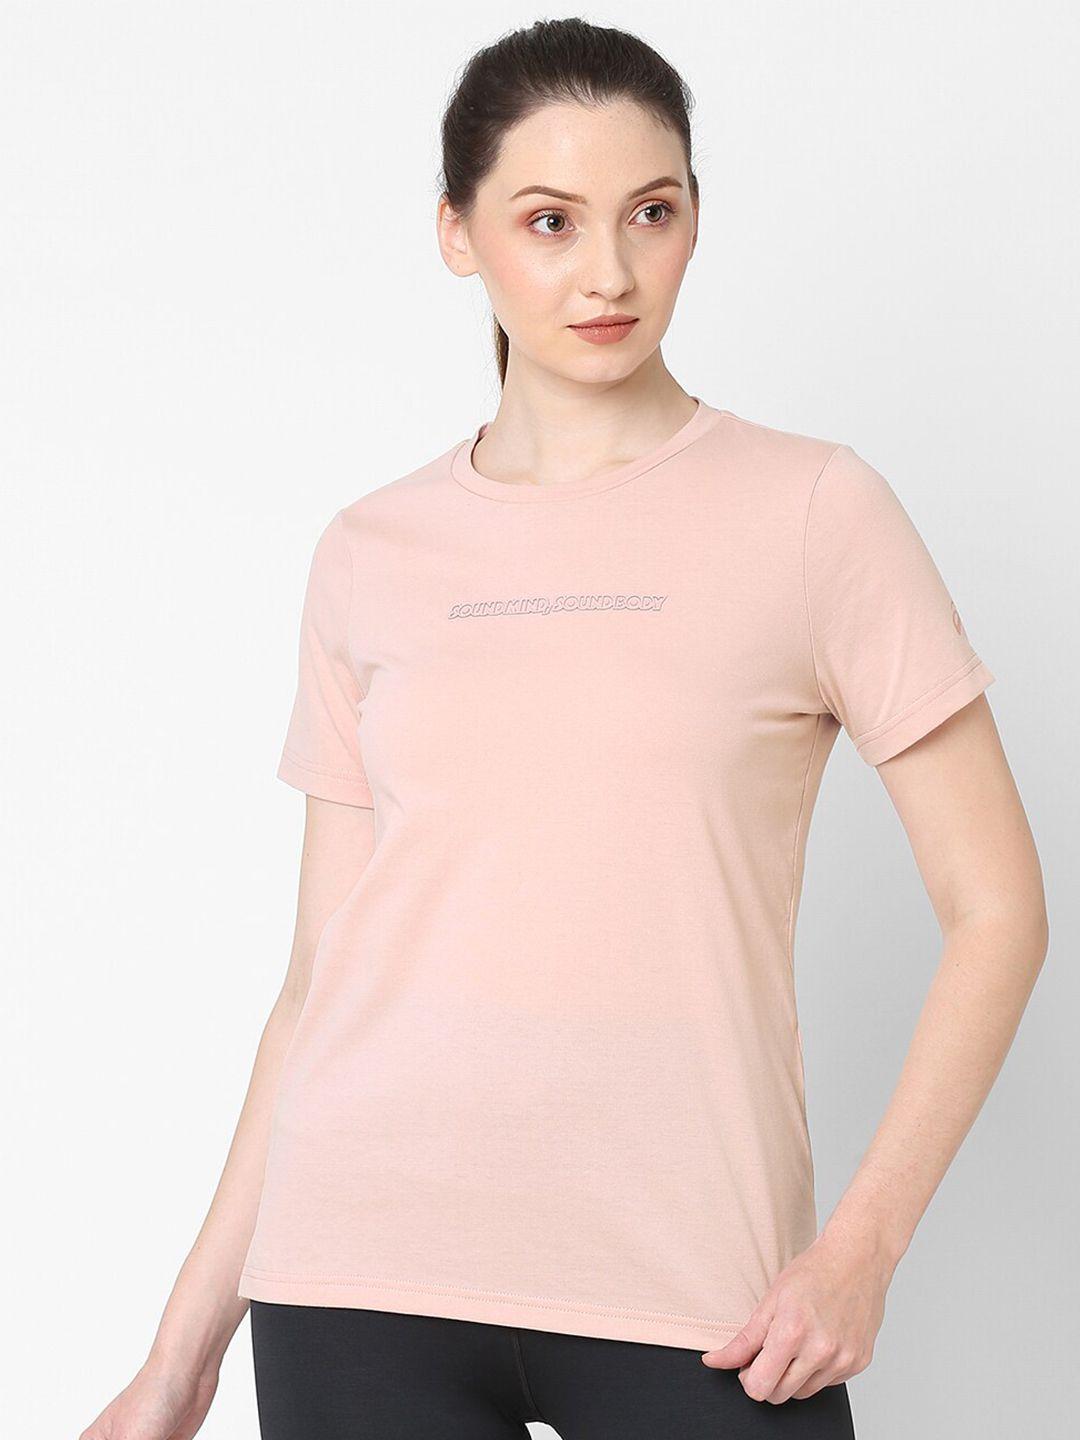 asics-logo-graphic-women-peach-coloured-typography-t-shirt